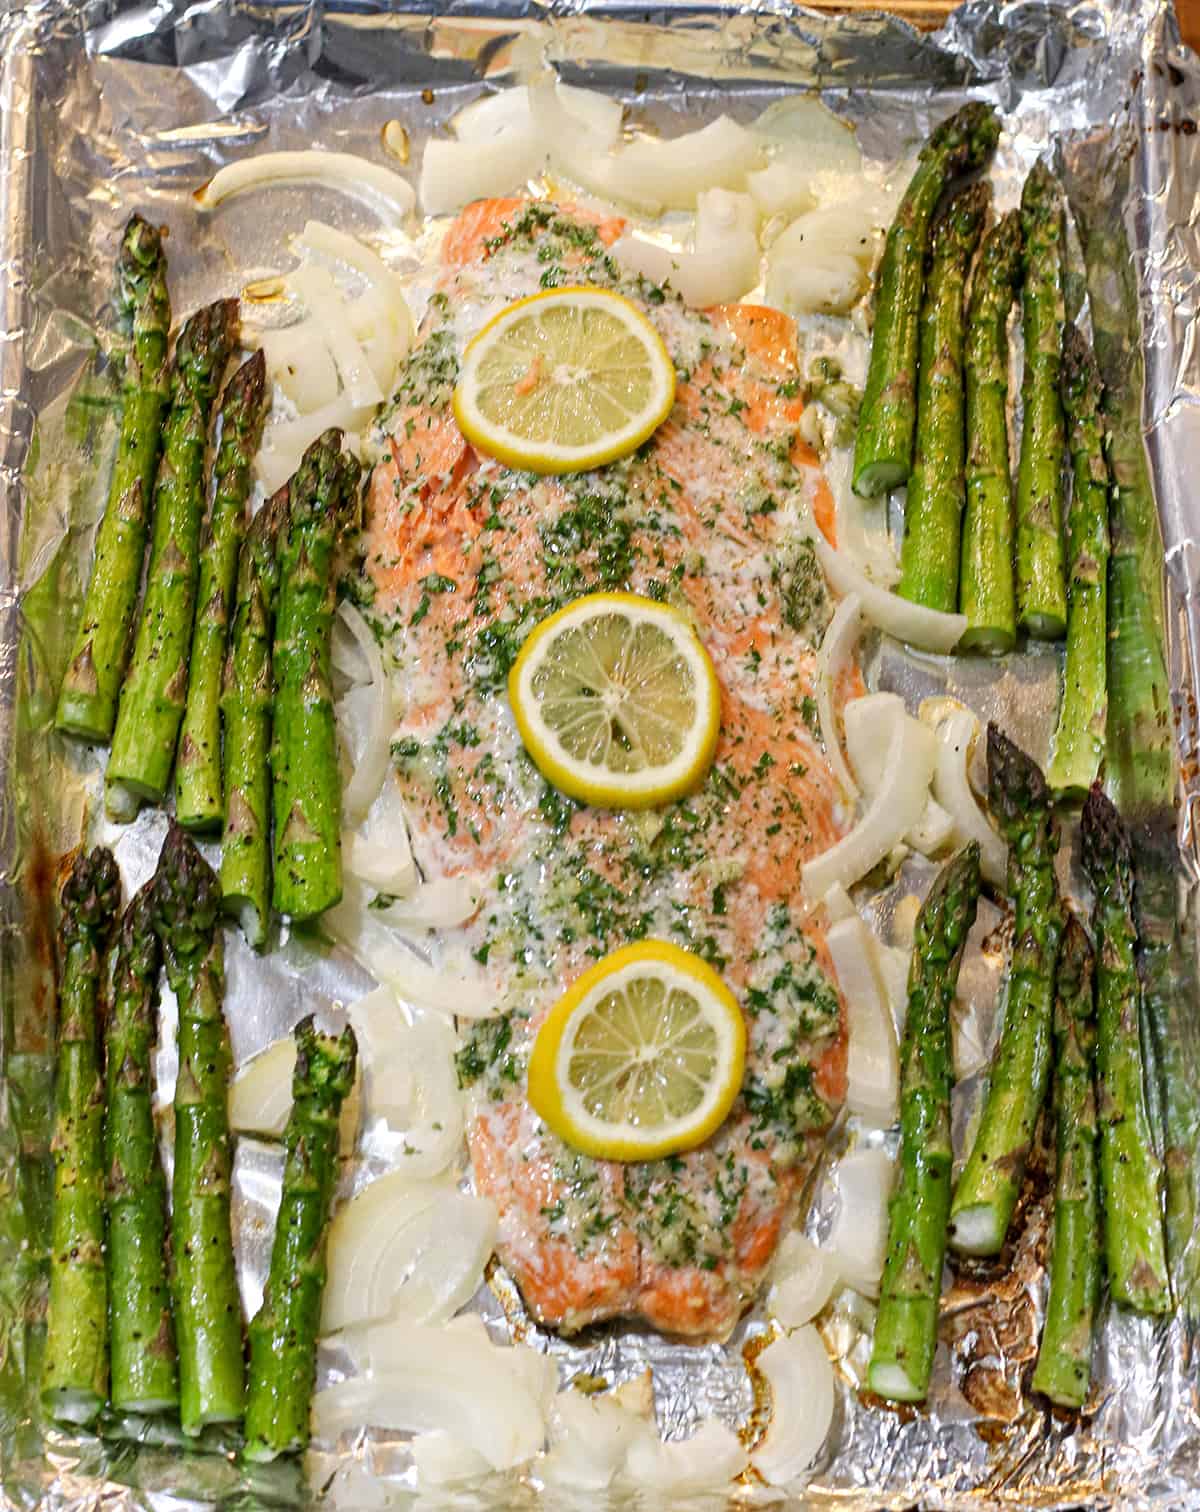 Sheet pan with salmon asparagus lemon and fresh herbs. 